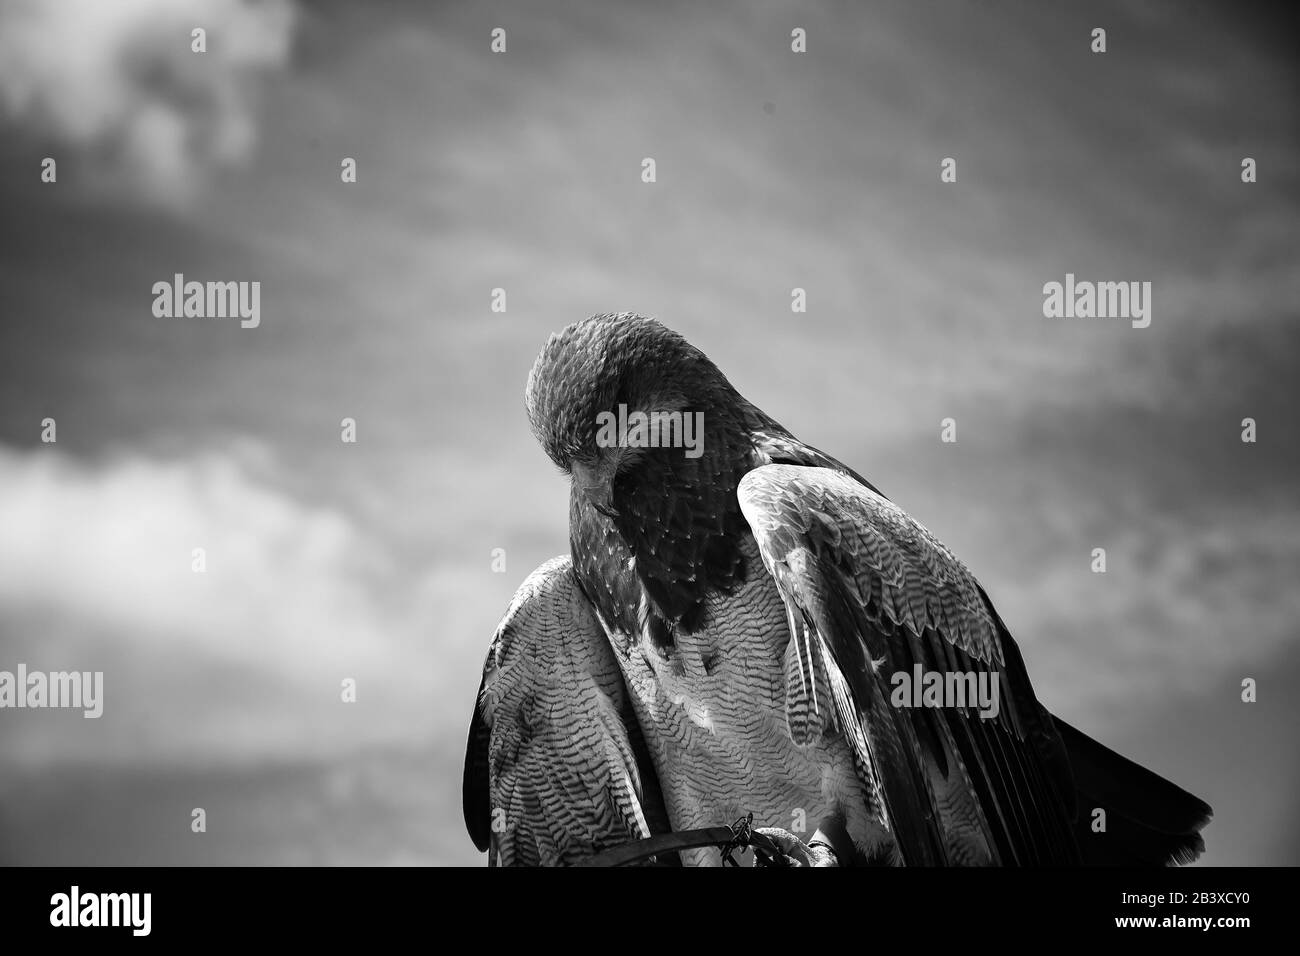 Wild eagle, bird of prey, animals and nature Stock Photo